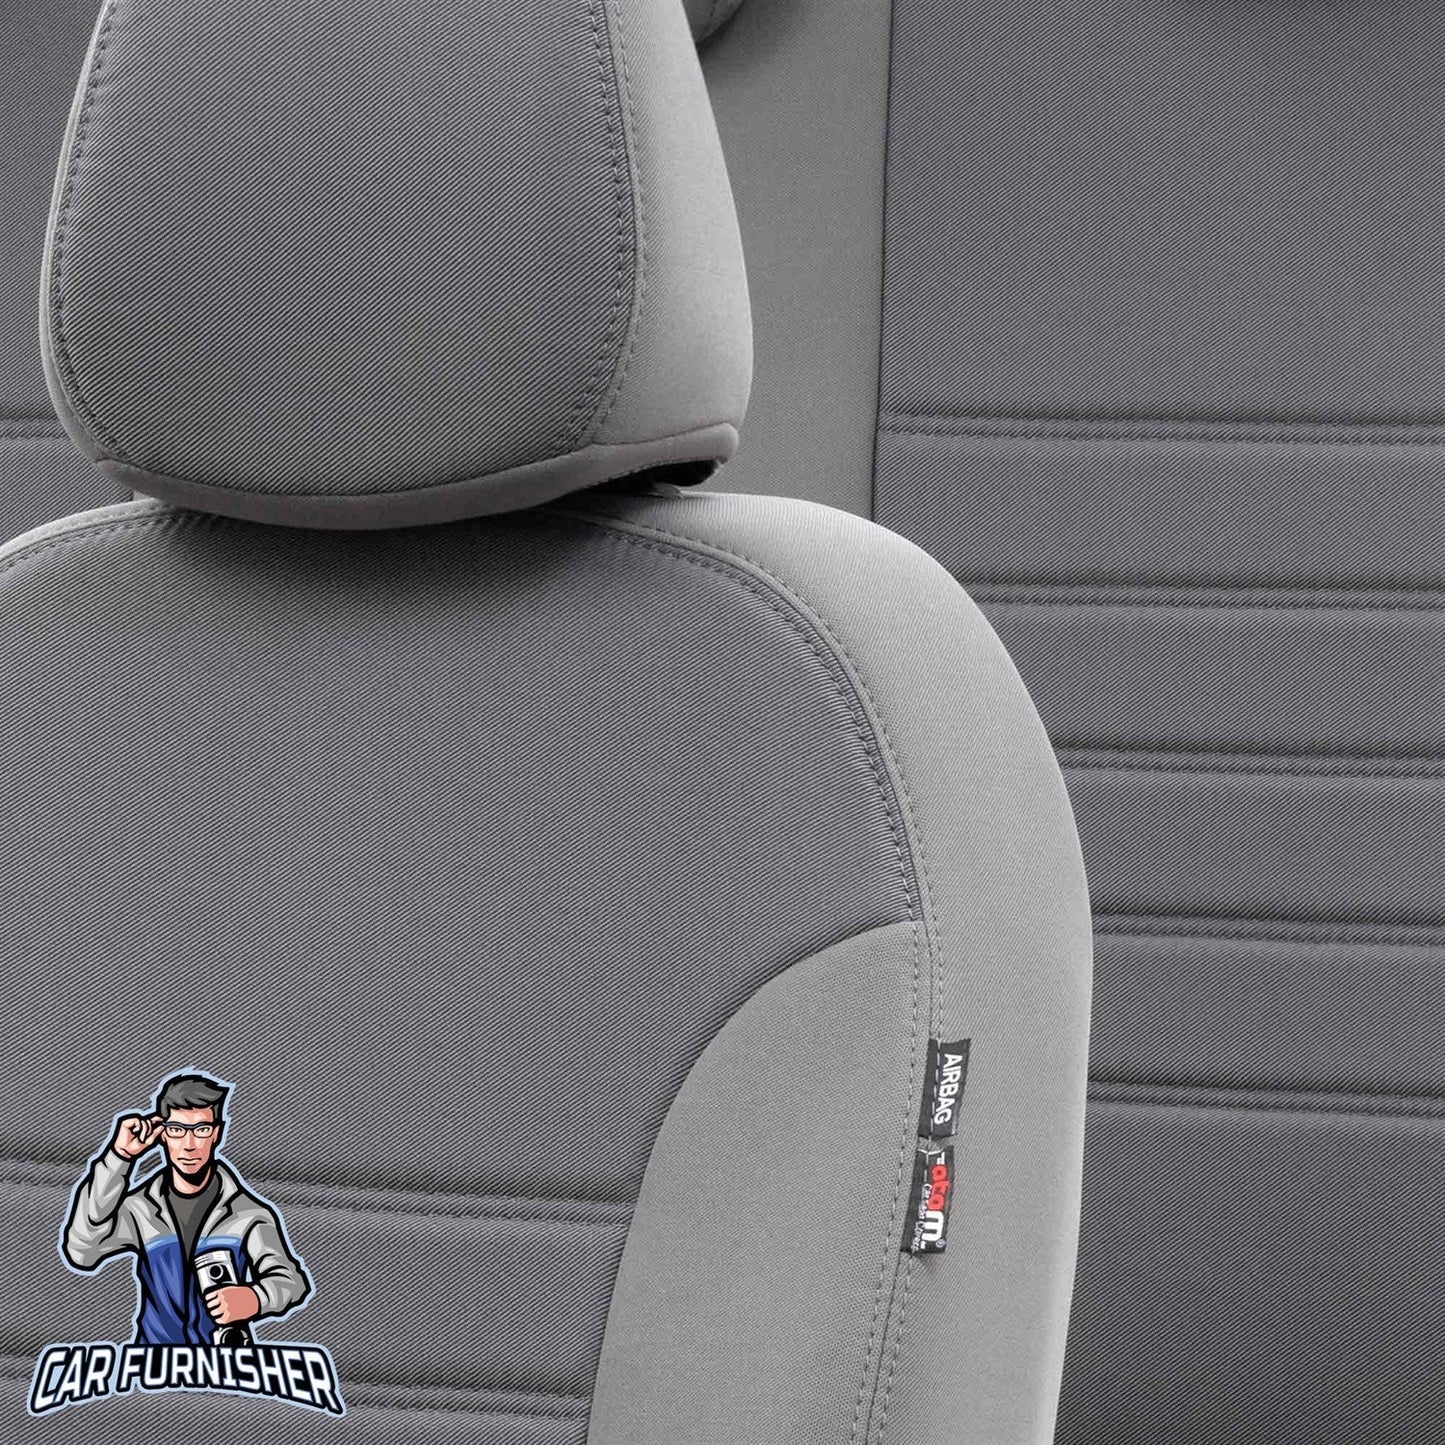 Seat Ateca Seat Covers Original Jacquard Design Gray Jacquard Fabric